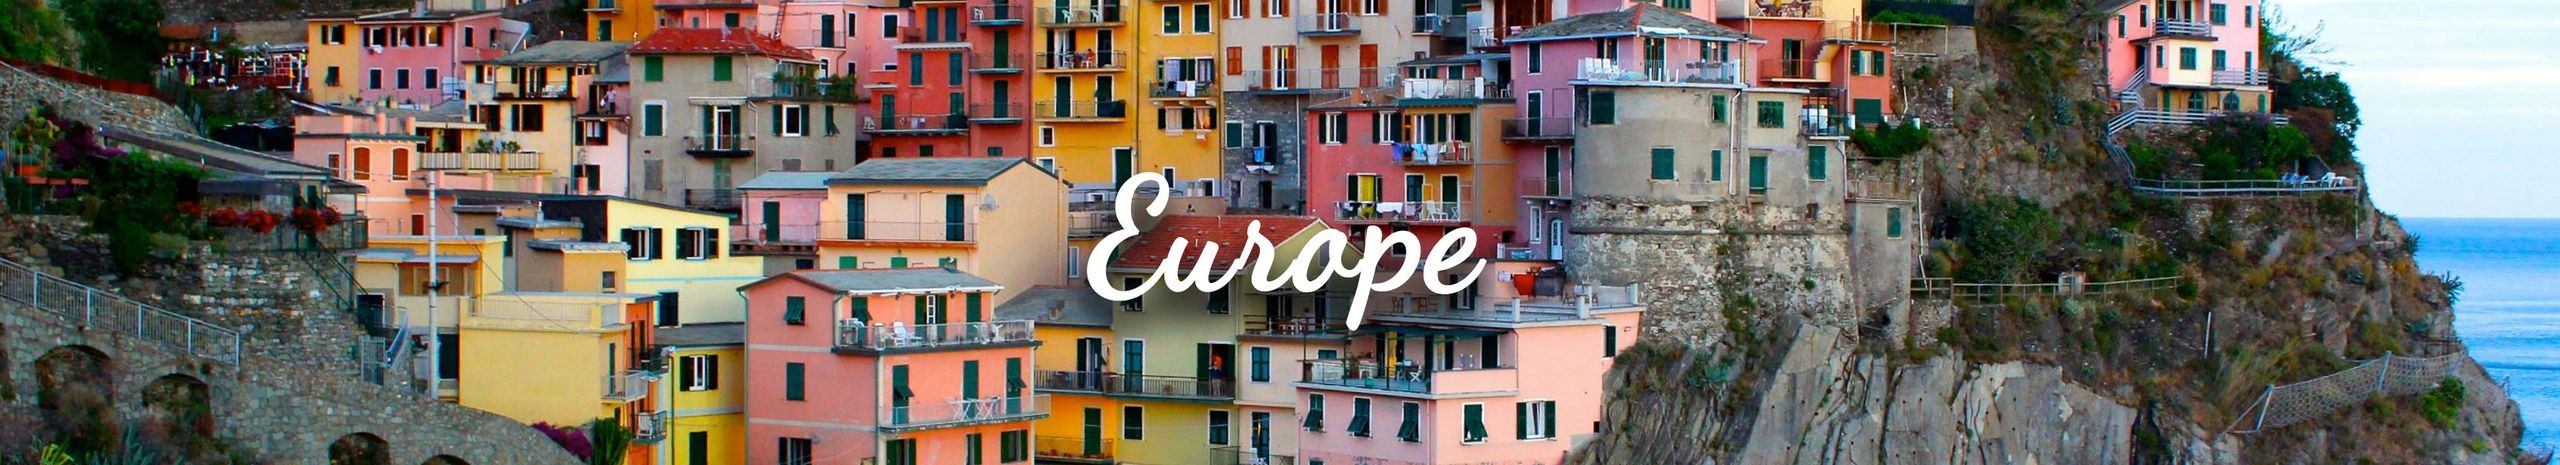 European Travel Itineraries